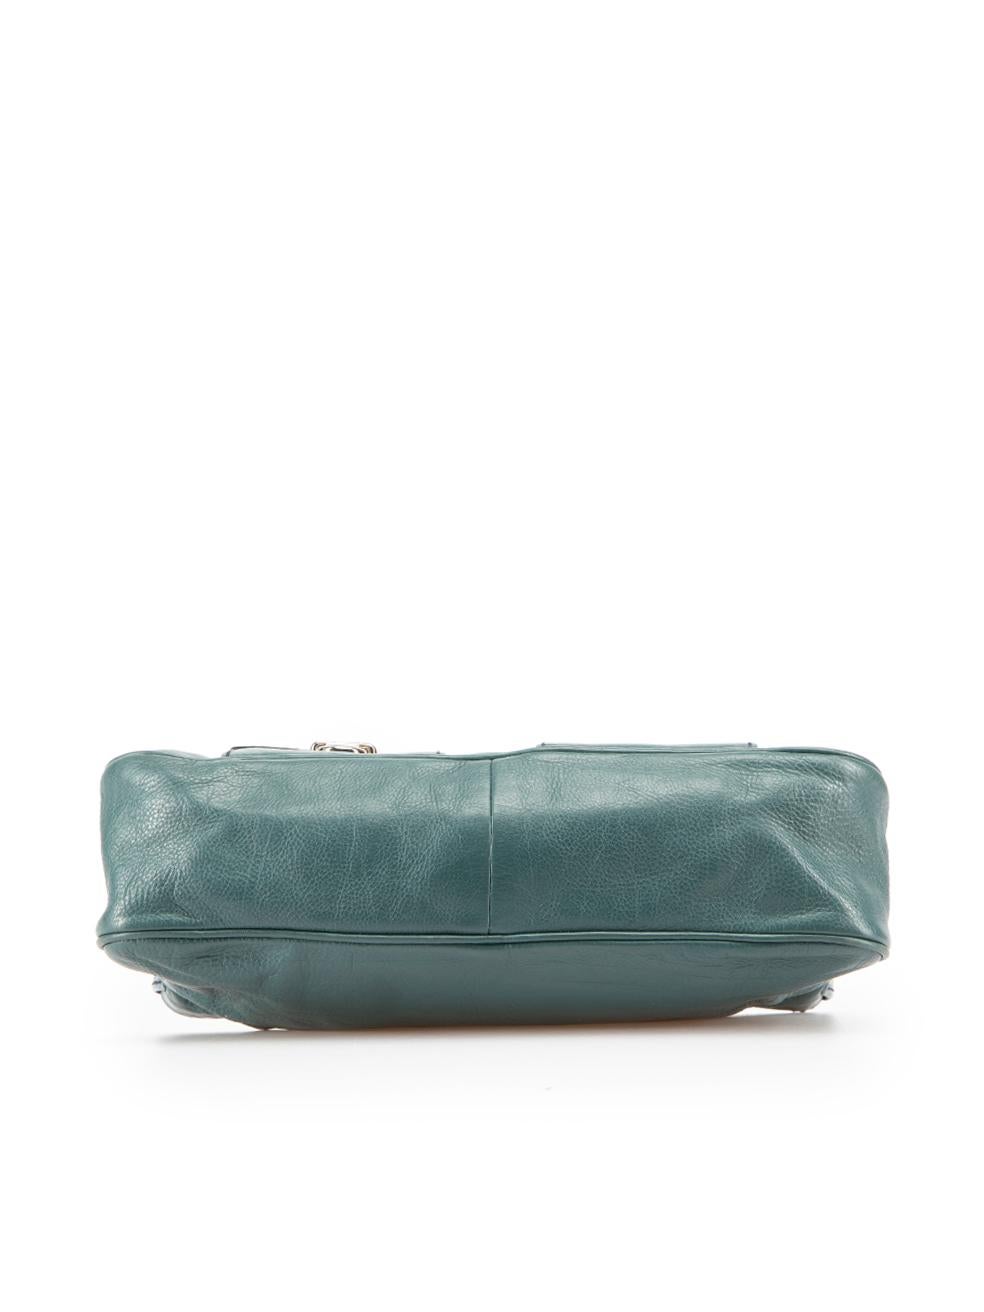 Marc Jacobs Women's Green Leather Medium Shoulder Bag 1